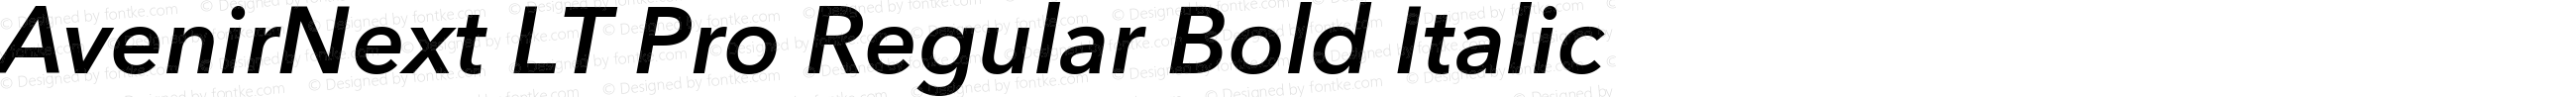 AvenirNext LT Pro Regular Bold Italic